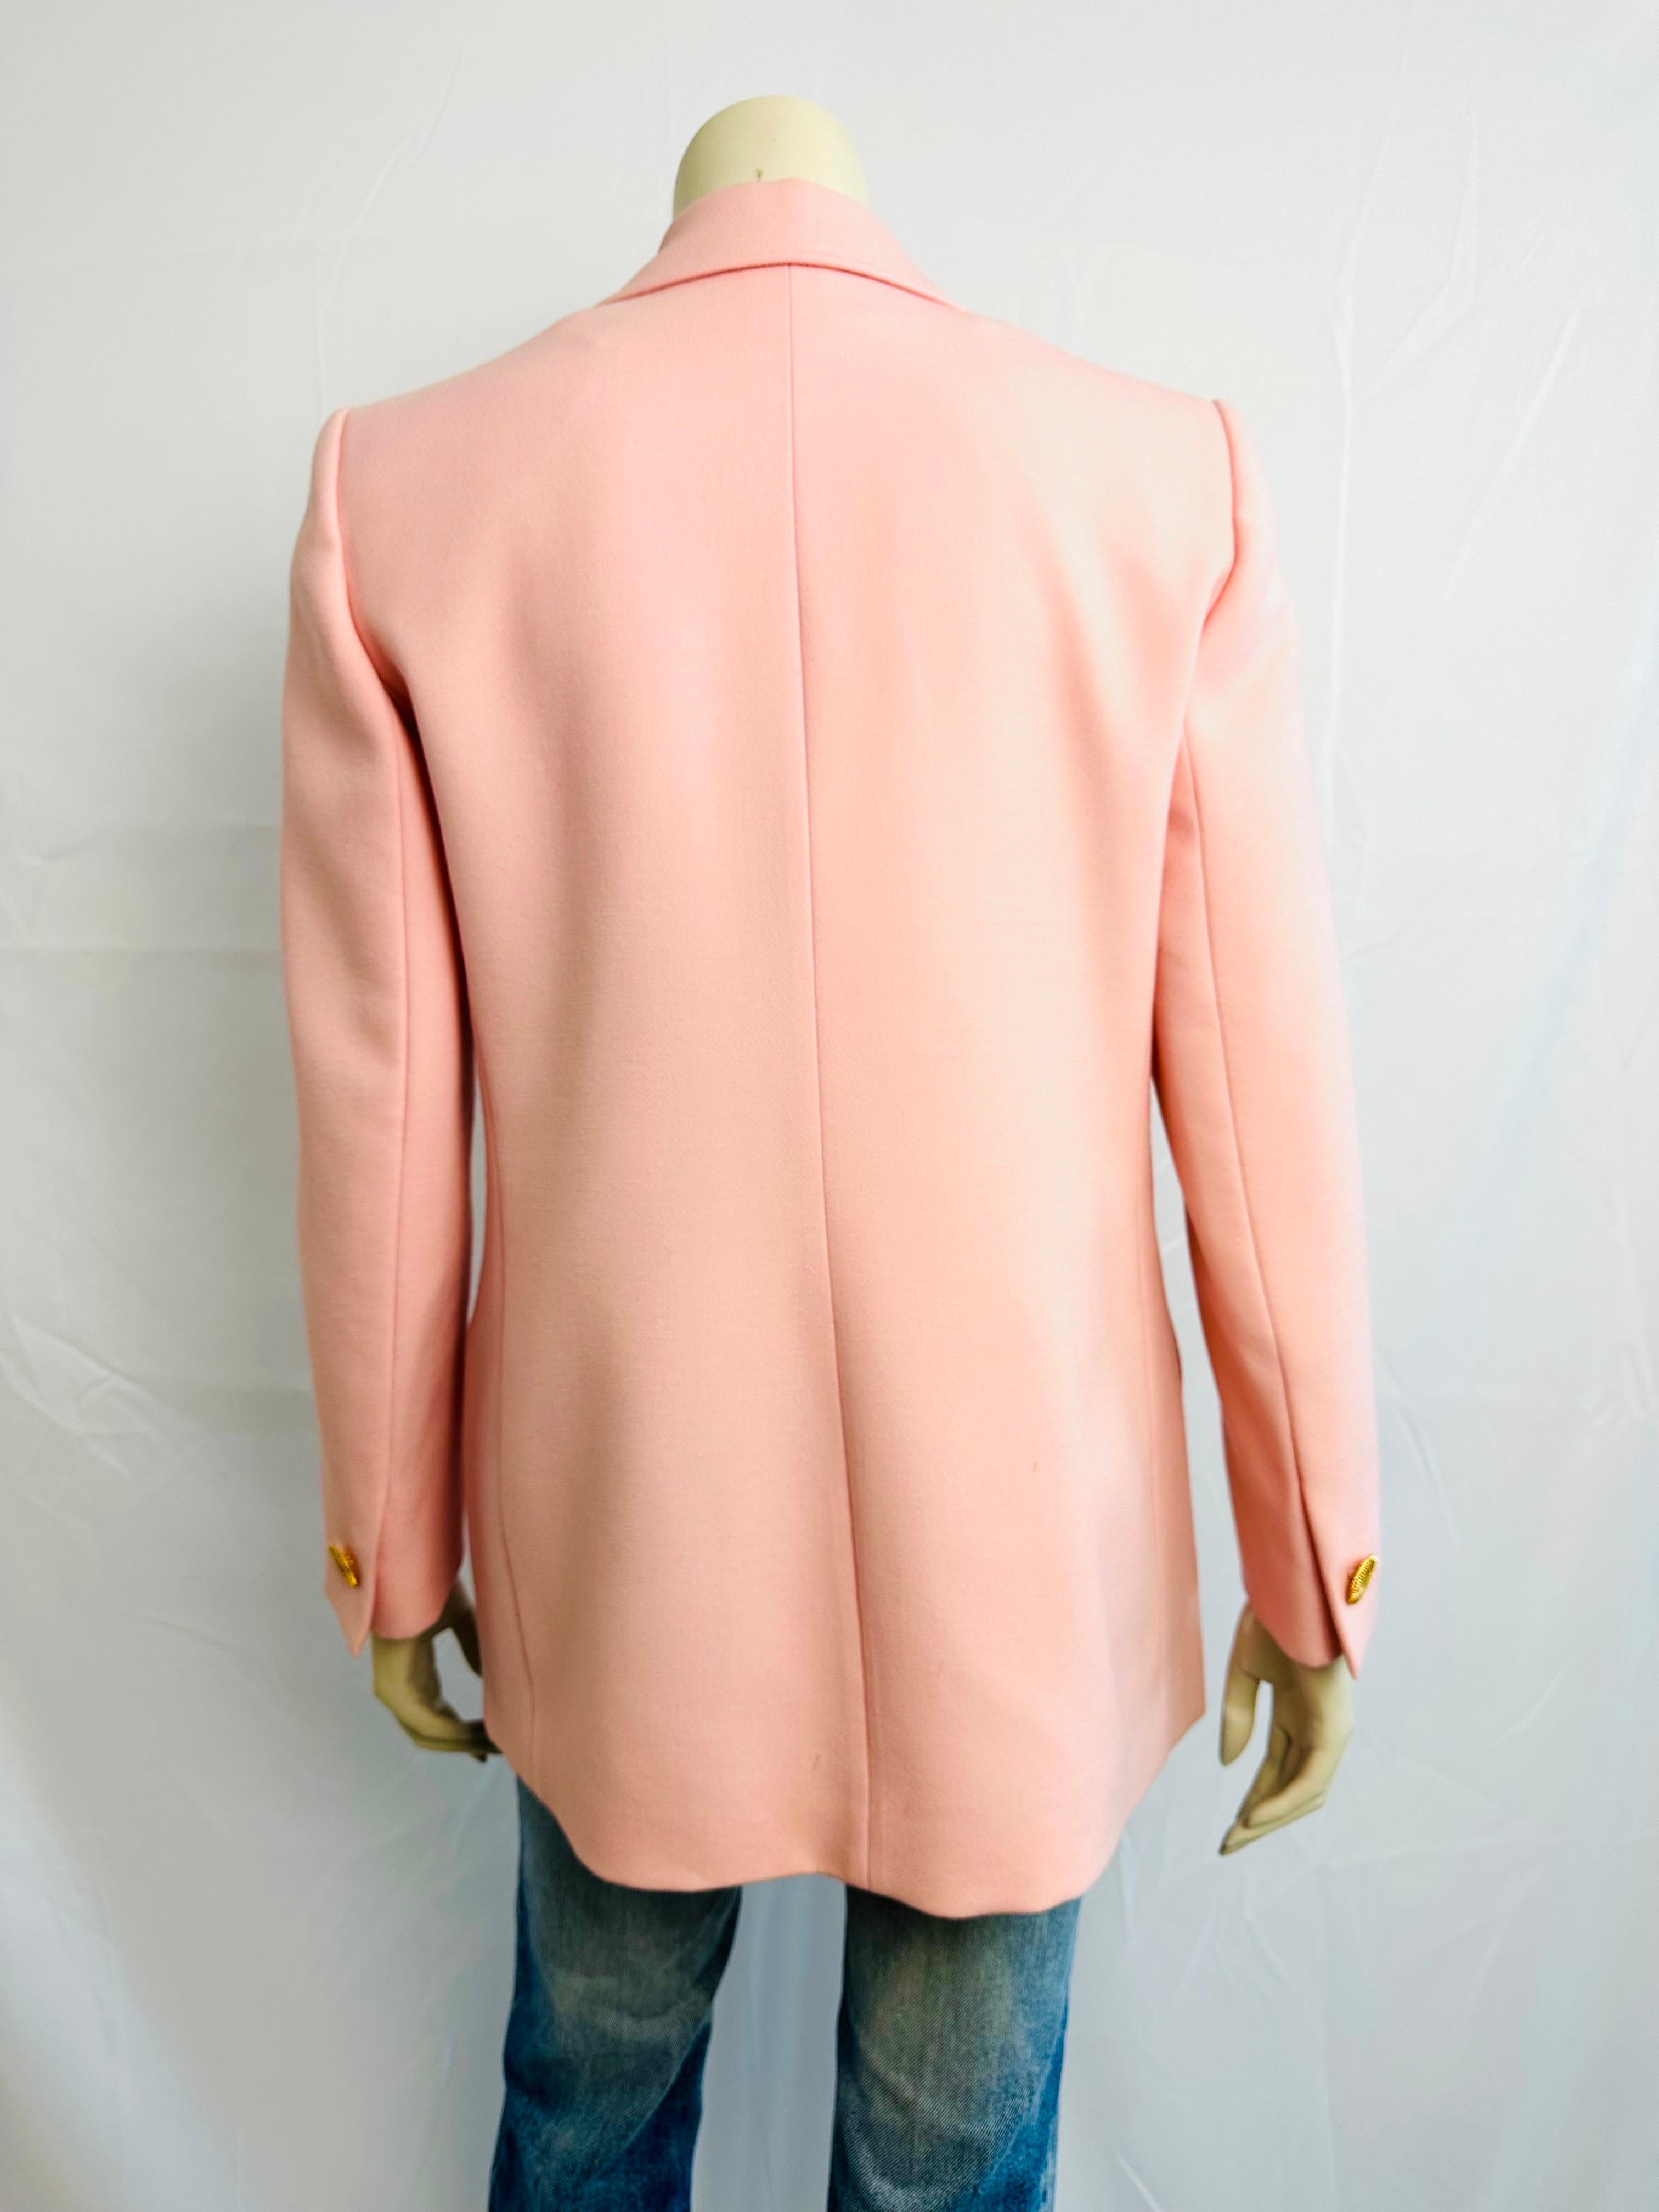 Pink wool blazer by jean louis scherrer 1980s For Sale 1